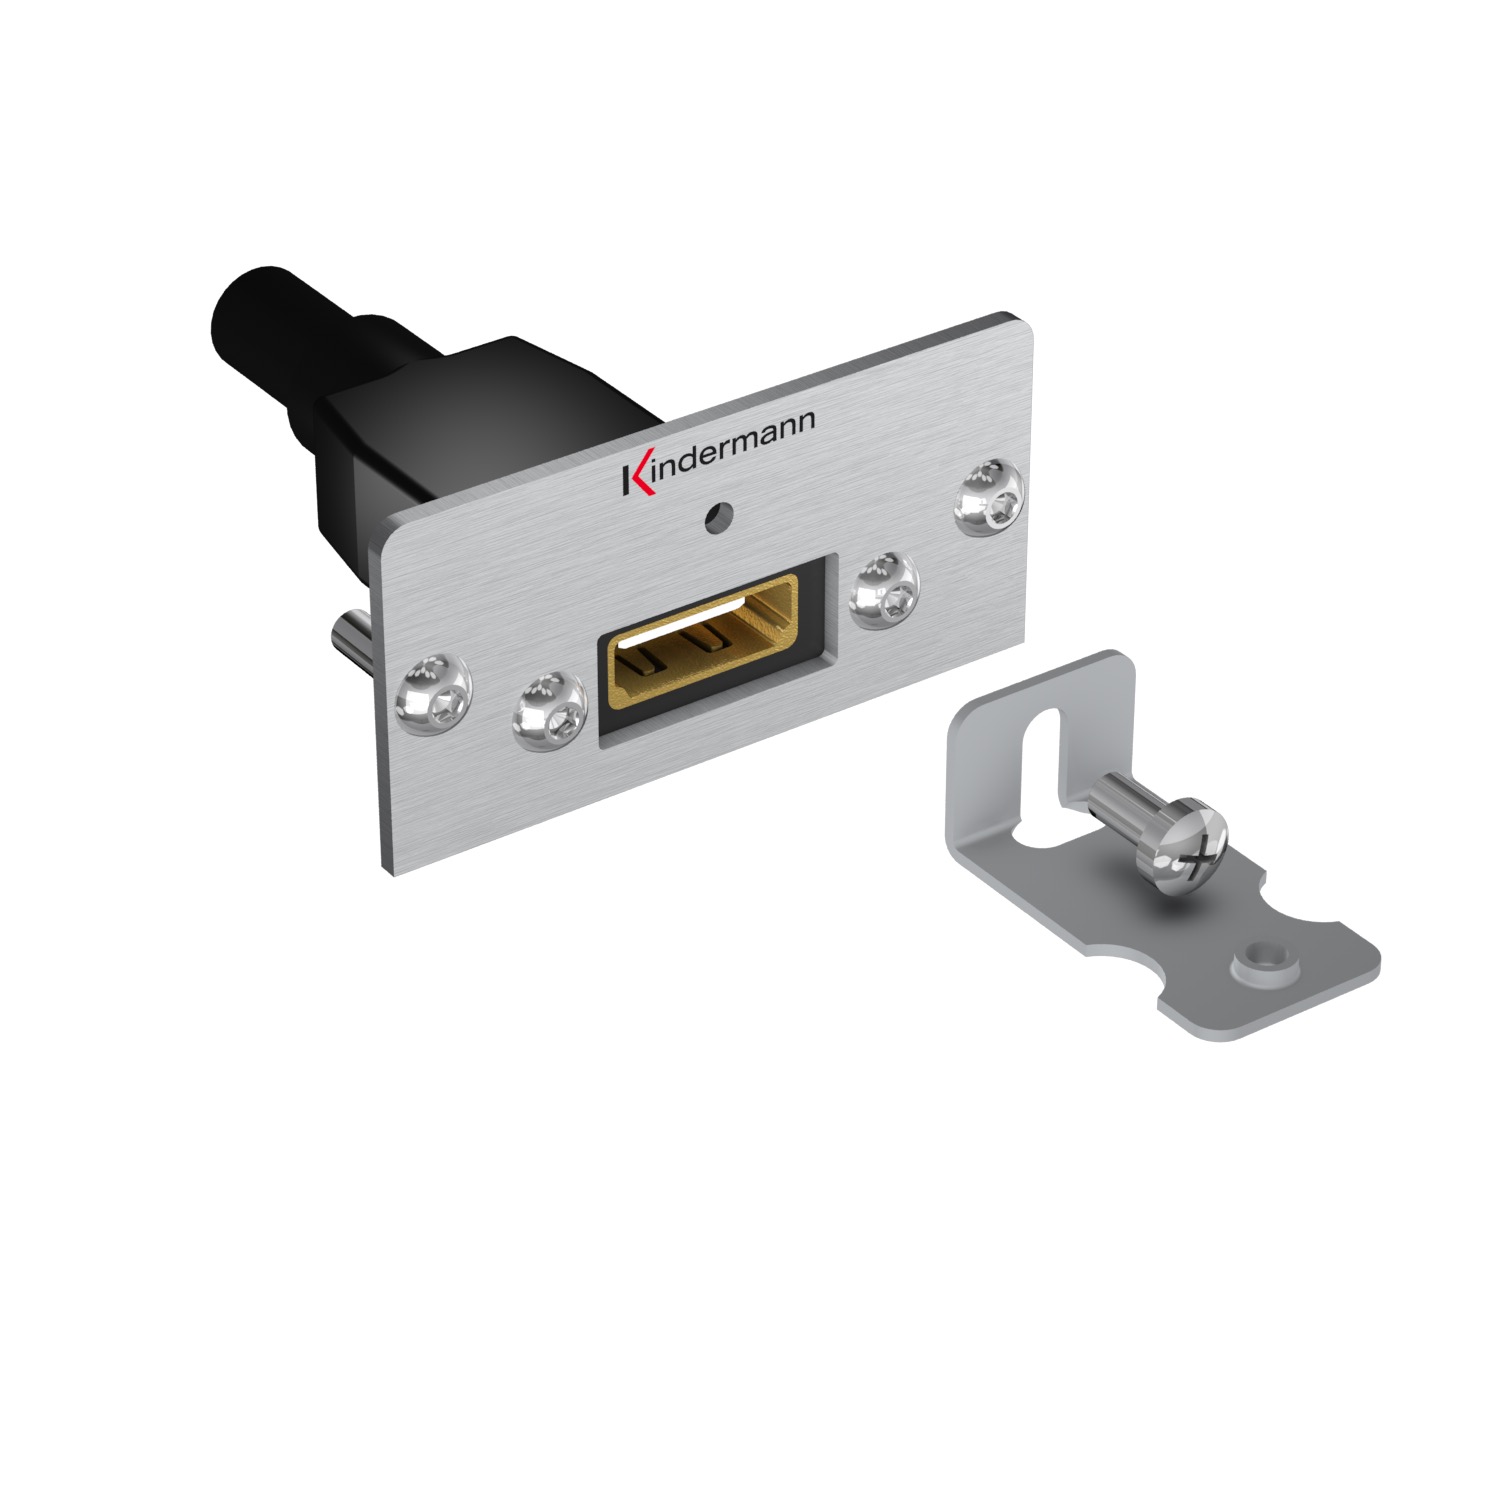 Konnect 50 alu HDMI with lock